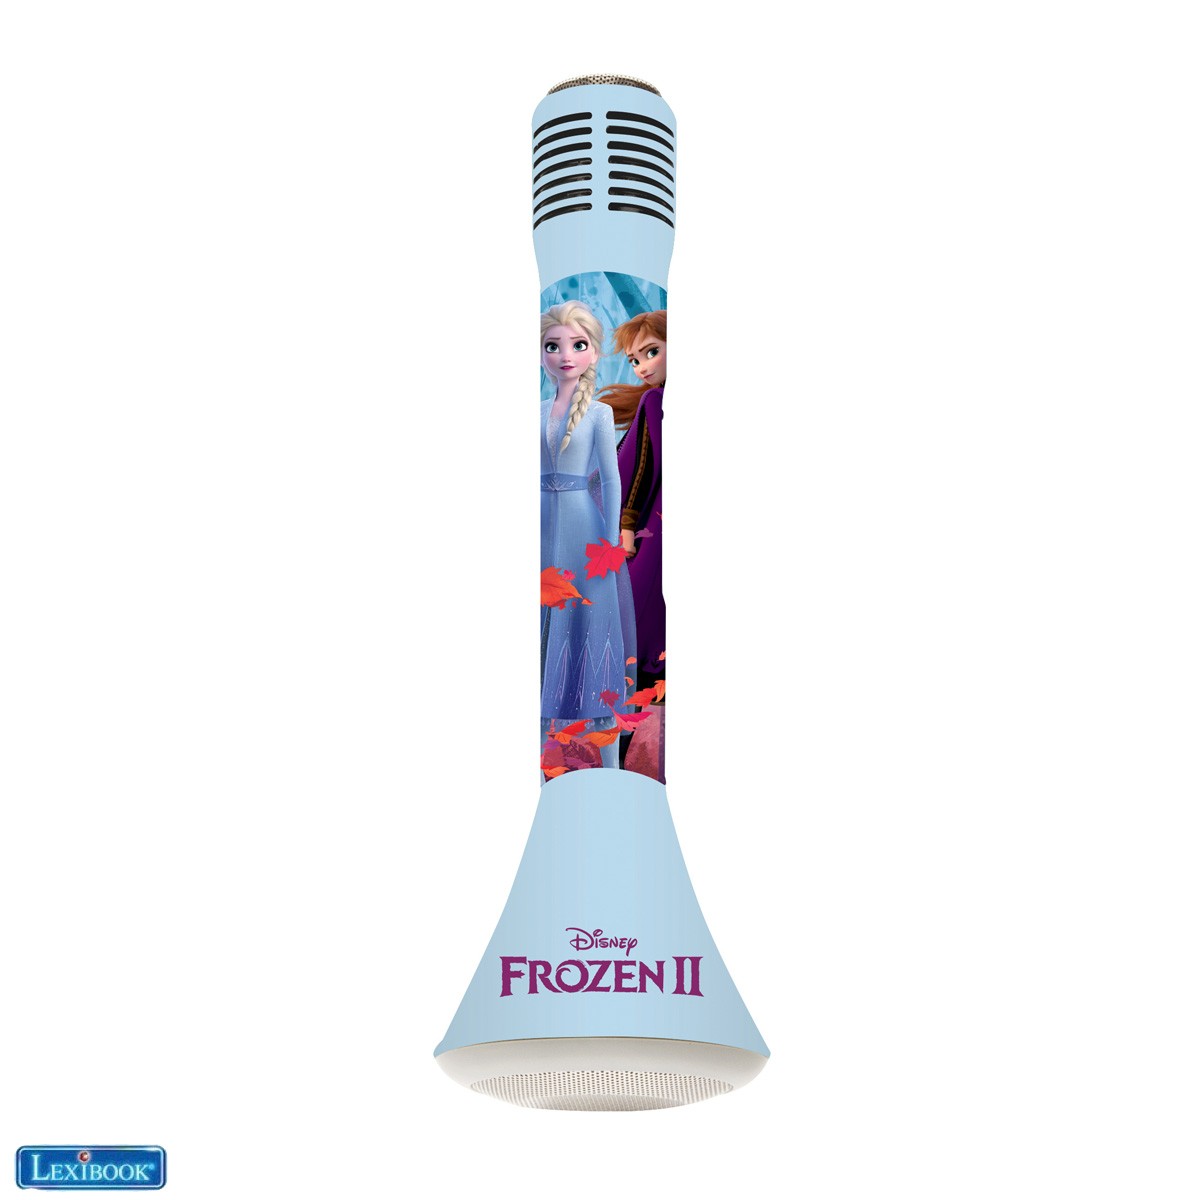  Frozen 2 Elsa Anna Olaf Portable Bluetooth® Speaker